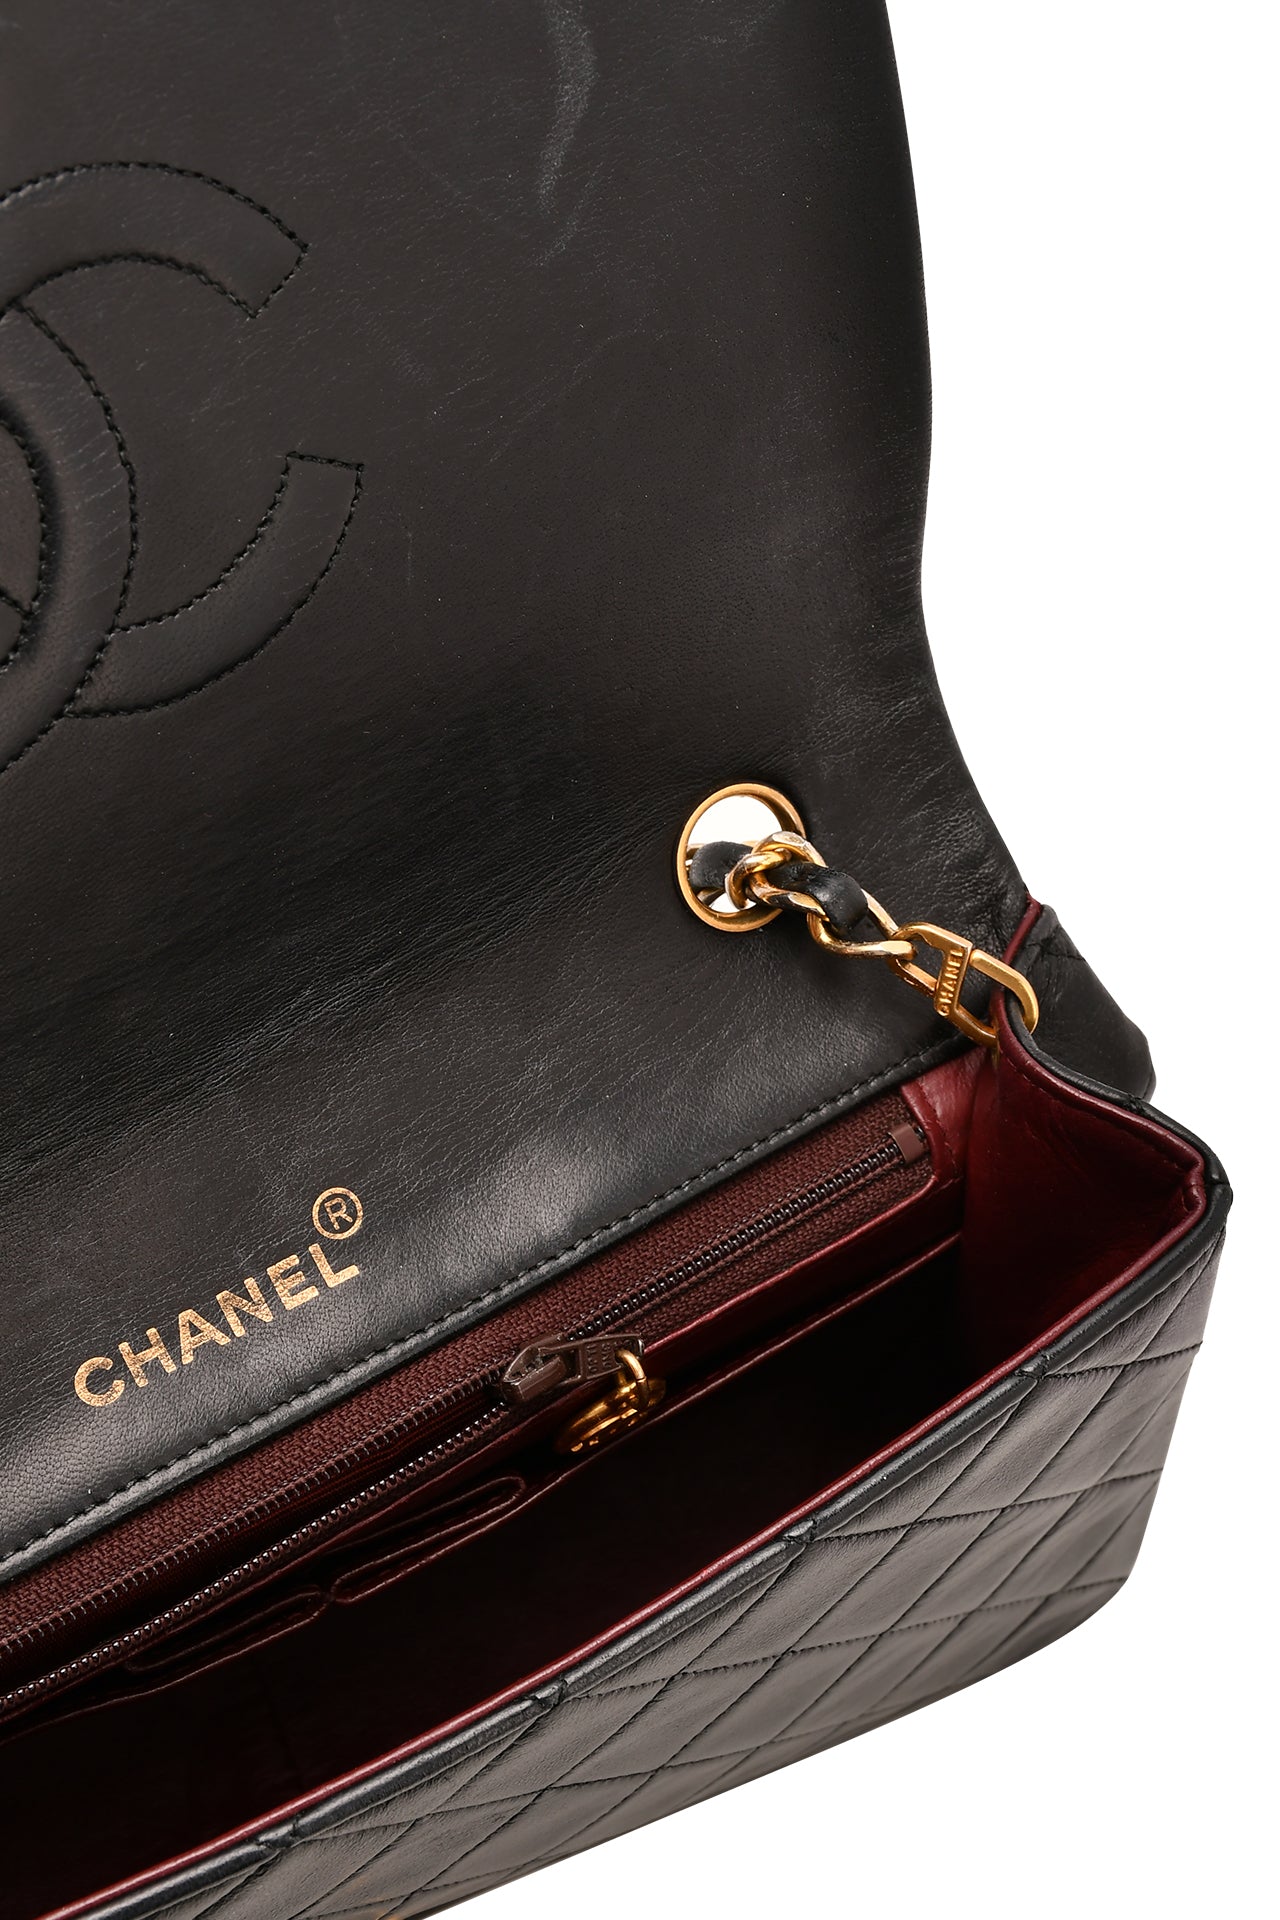 Chanel Black Leather CC Single Flap Bag